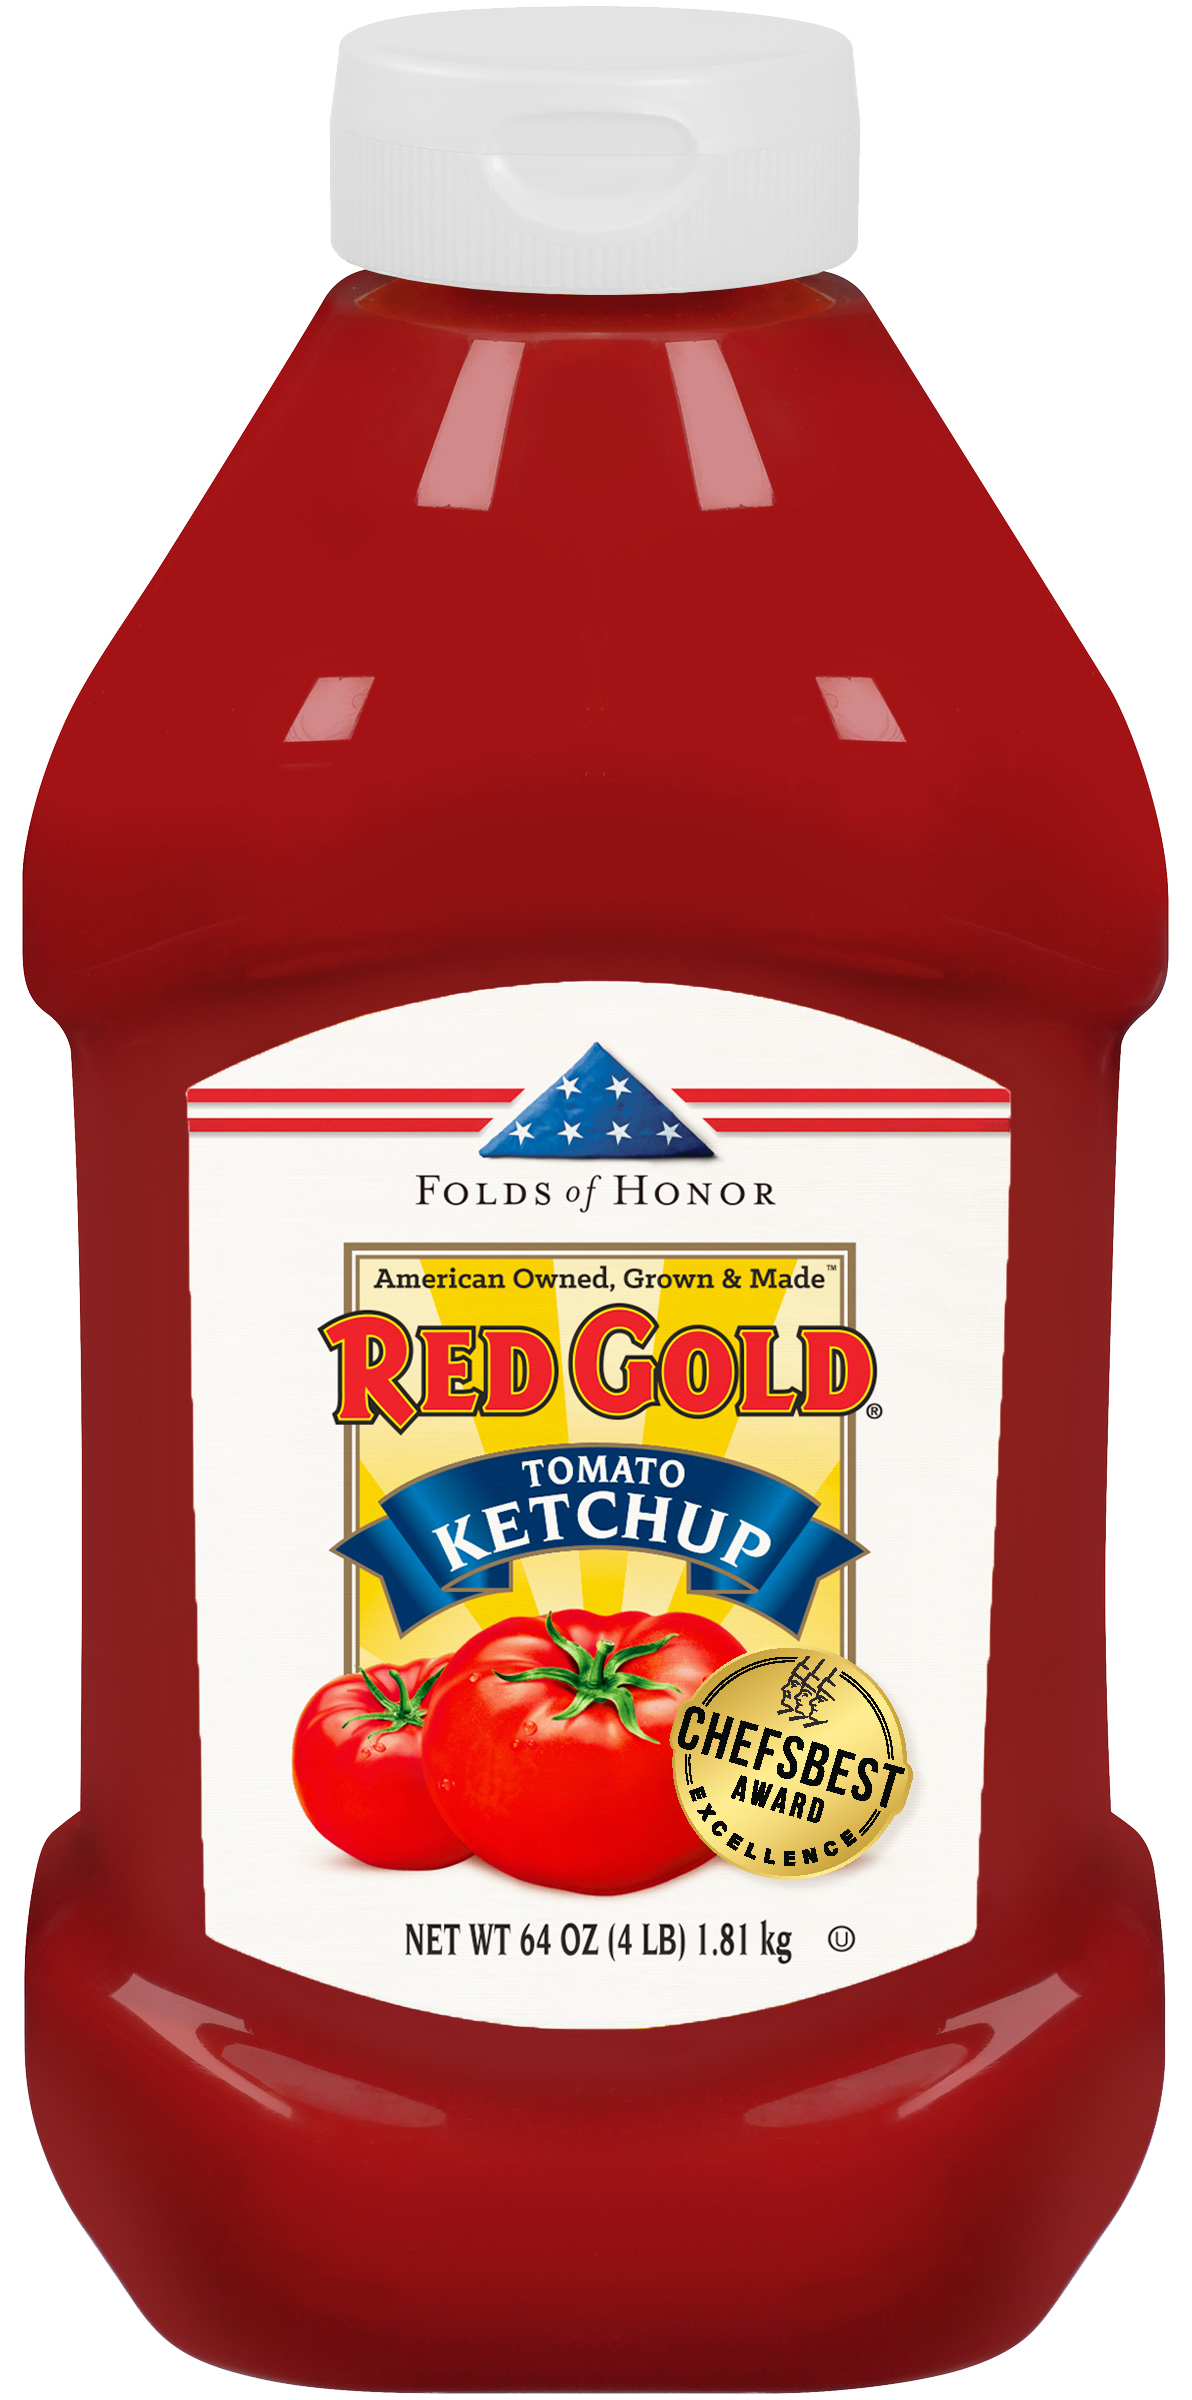 https://www.redgoldtomatoes.com/images/default-source/folds-of-honor-images/rg_64z_foh_ketchup_render.jpg?sfvrsn=97b25a87_2